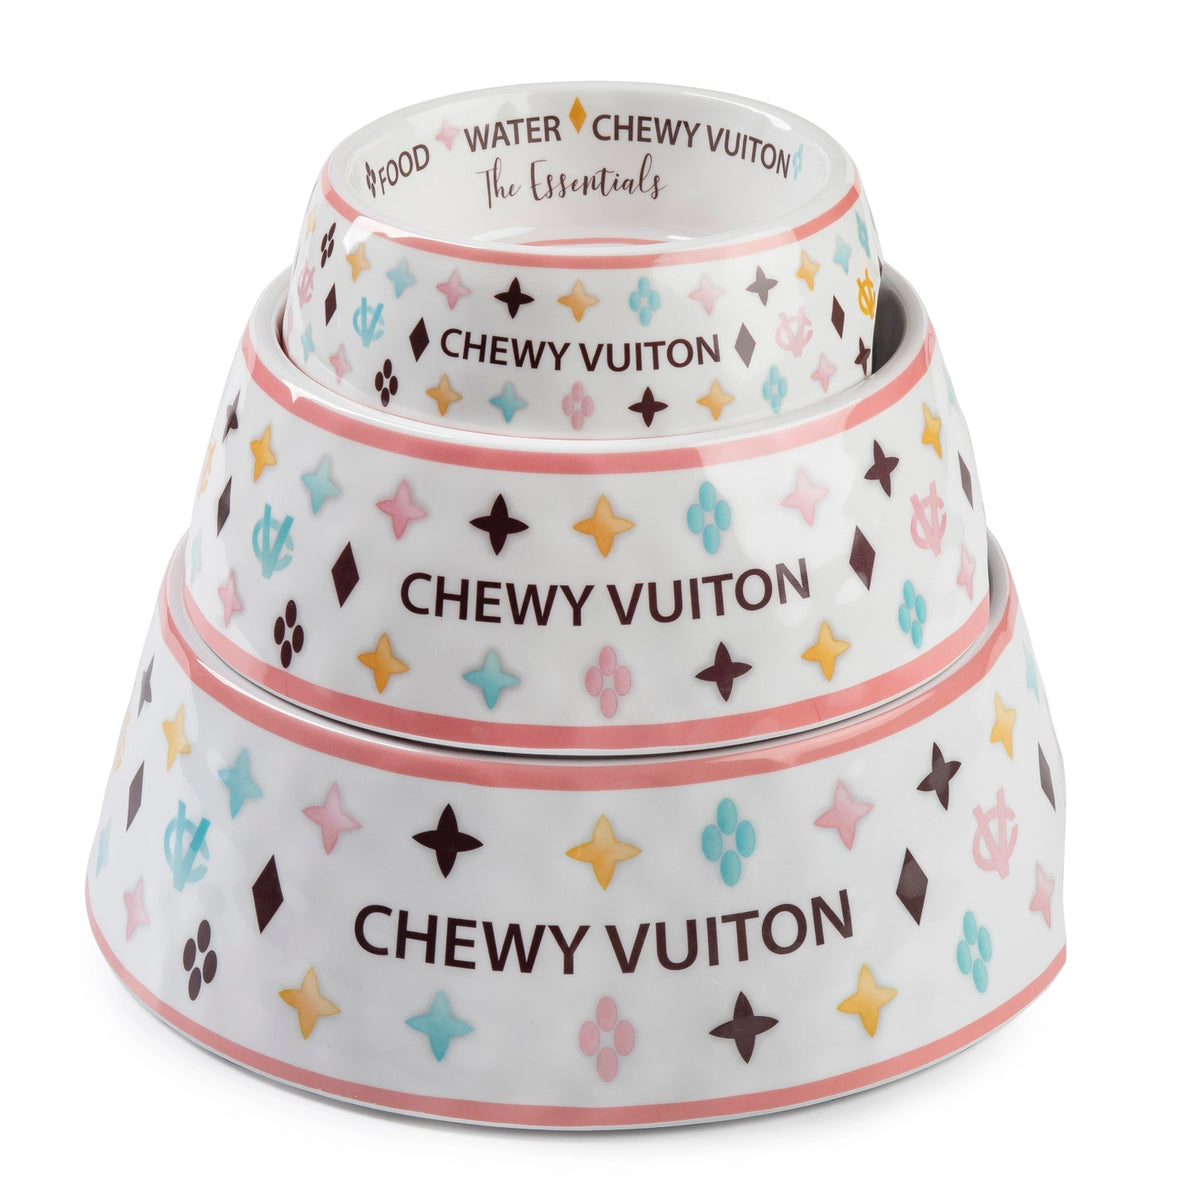 Haute Diggity Dog - Checker Chewy Vuiton White Dog Bowl